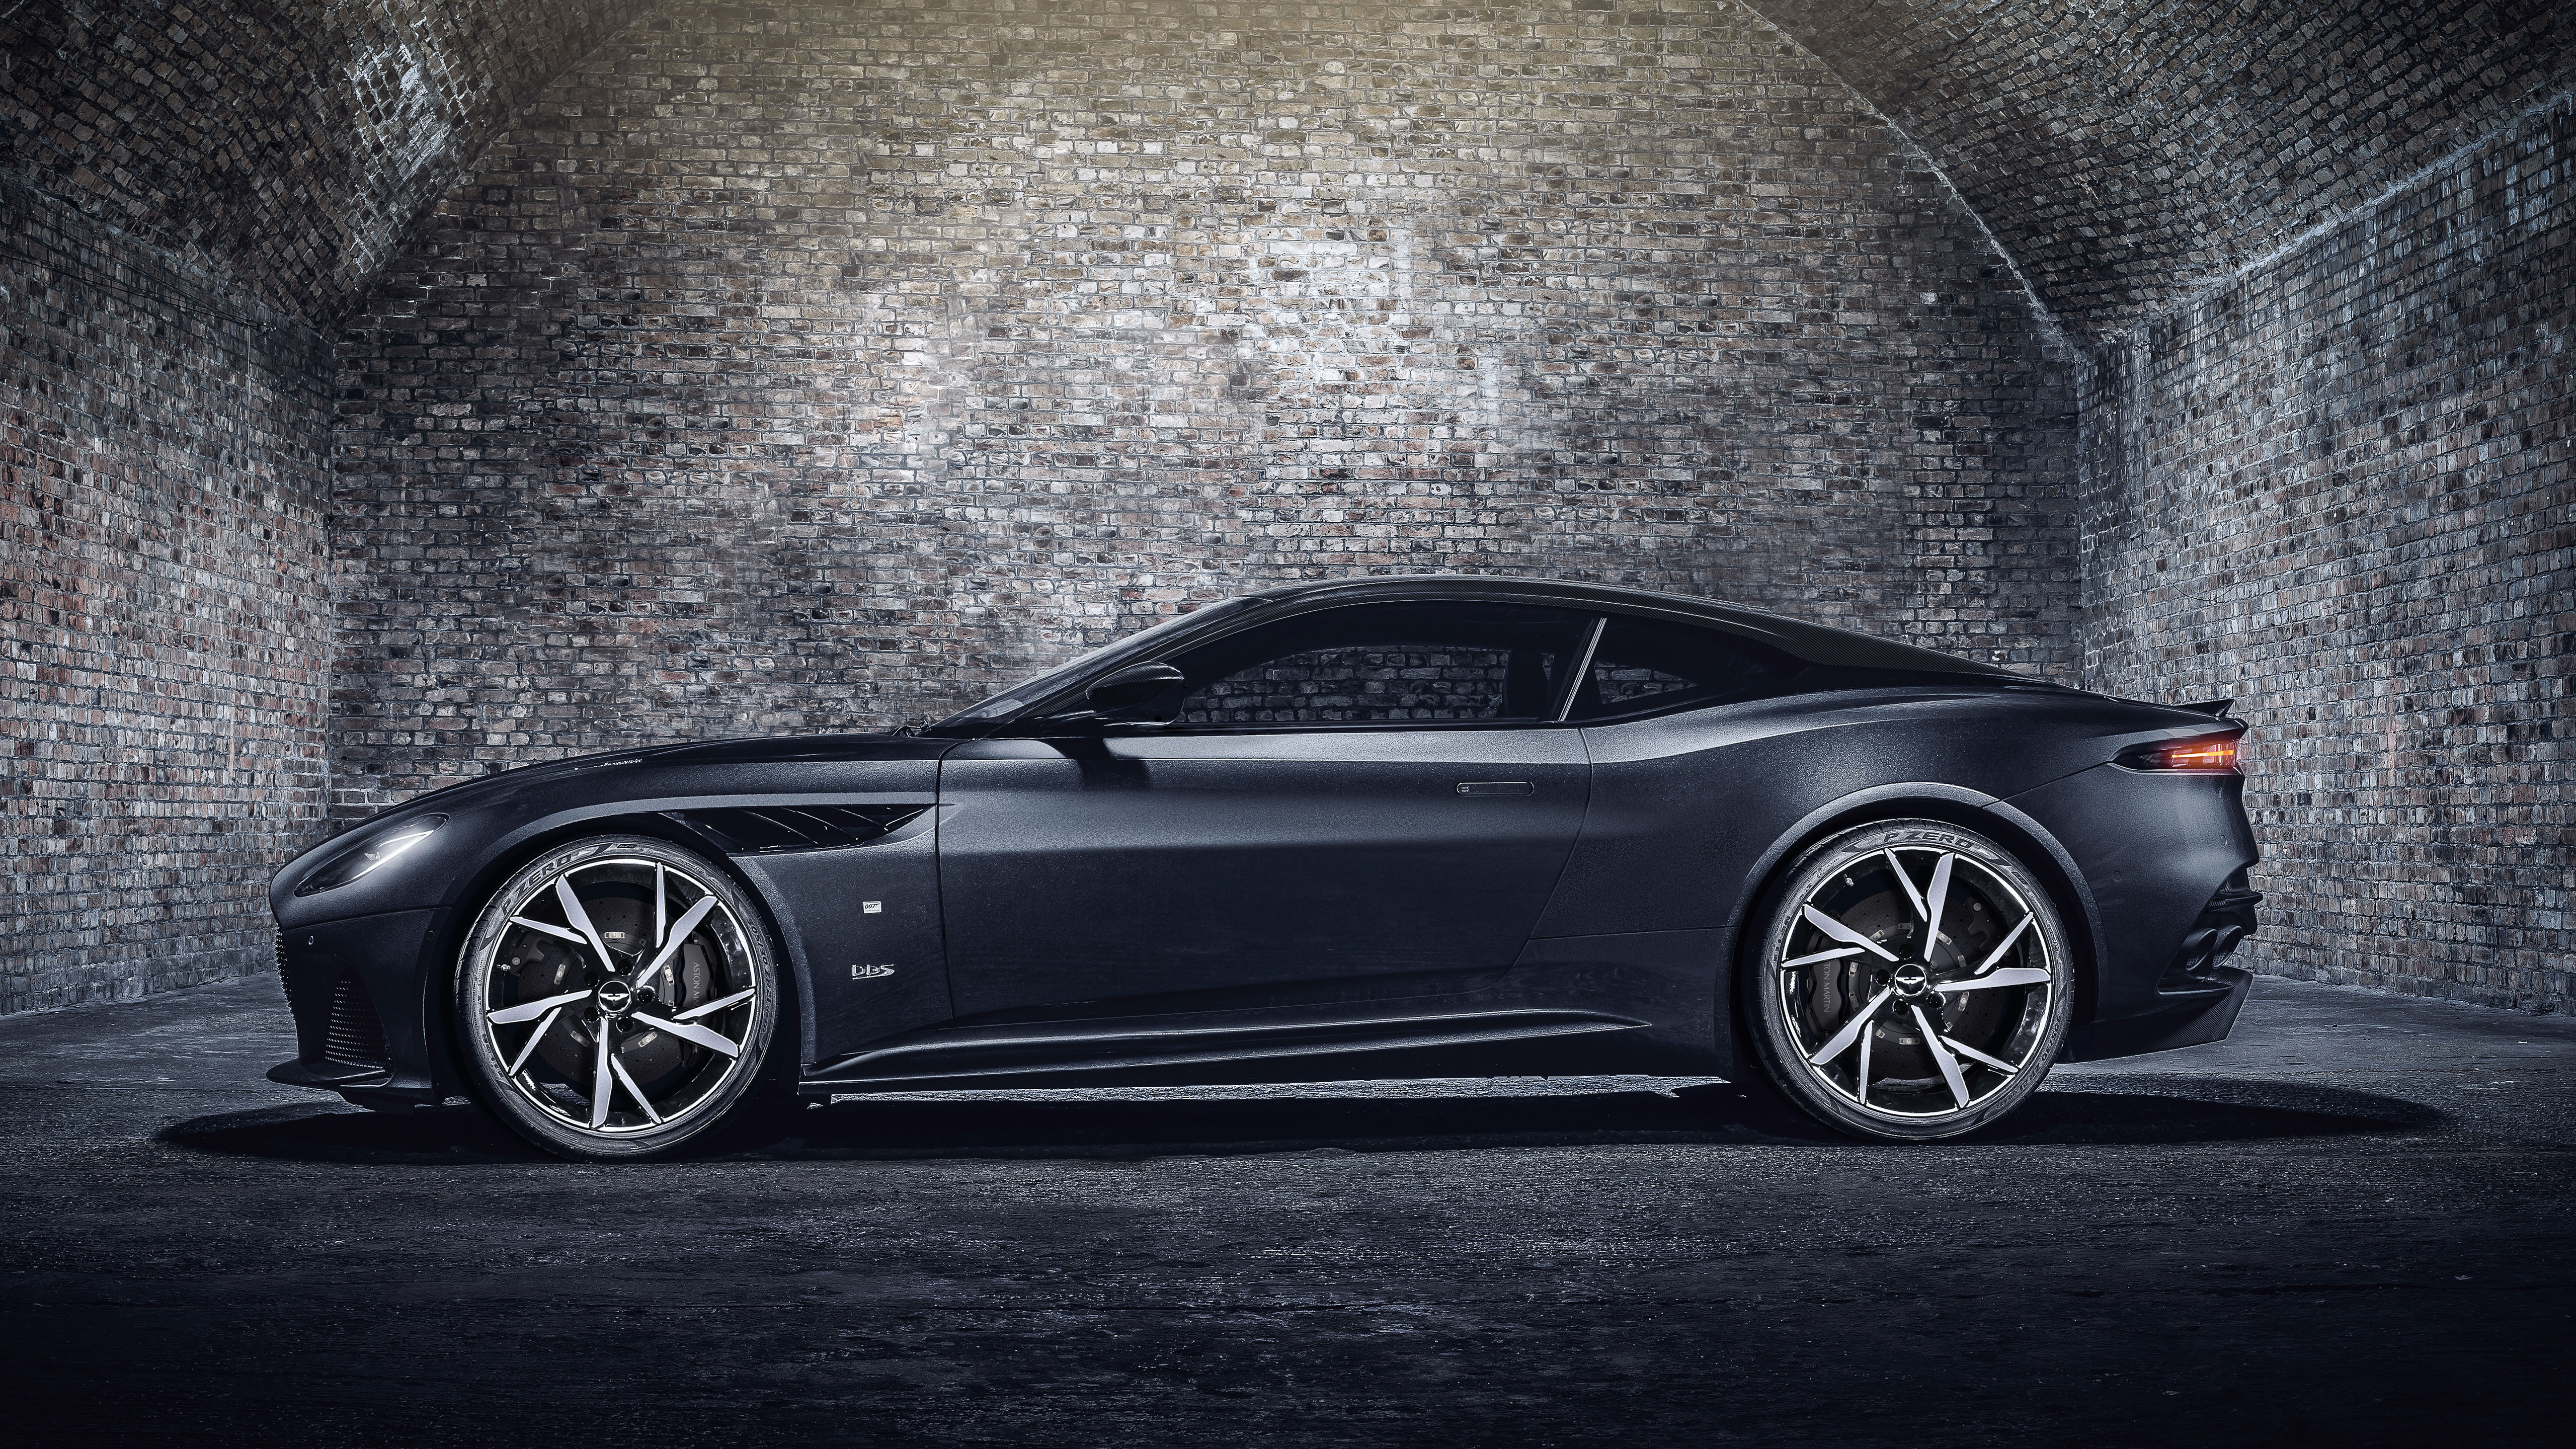 Q By Aston Martin Dbs Superleggera 007 Edition 5k Wallpaper Hd Car Wallpapers Id